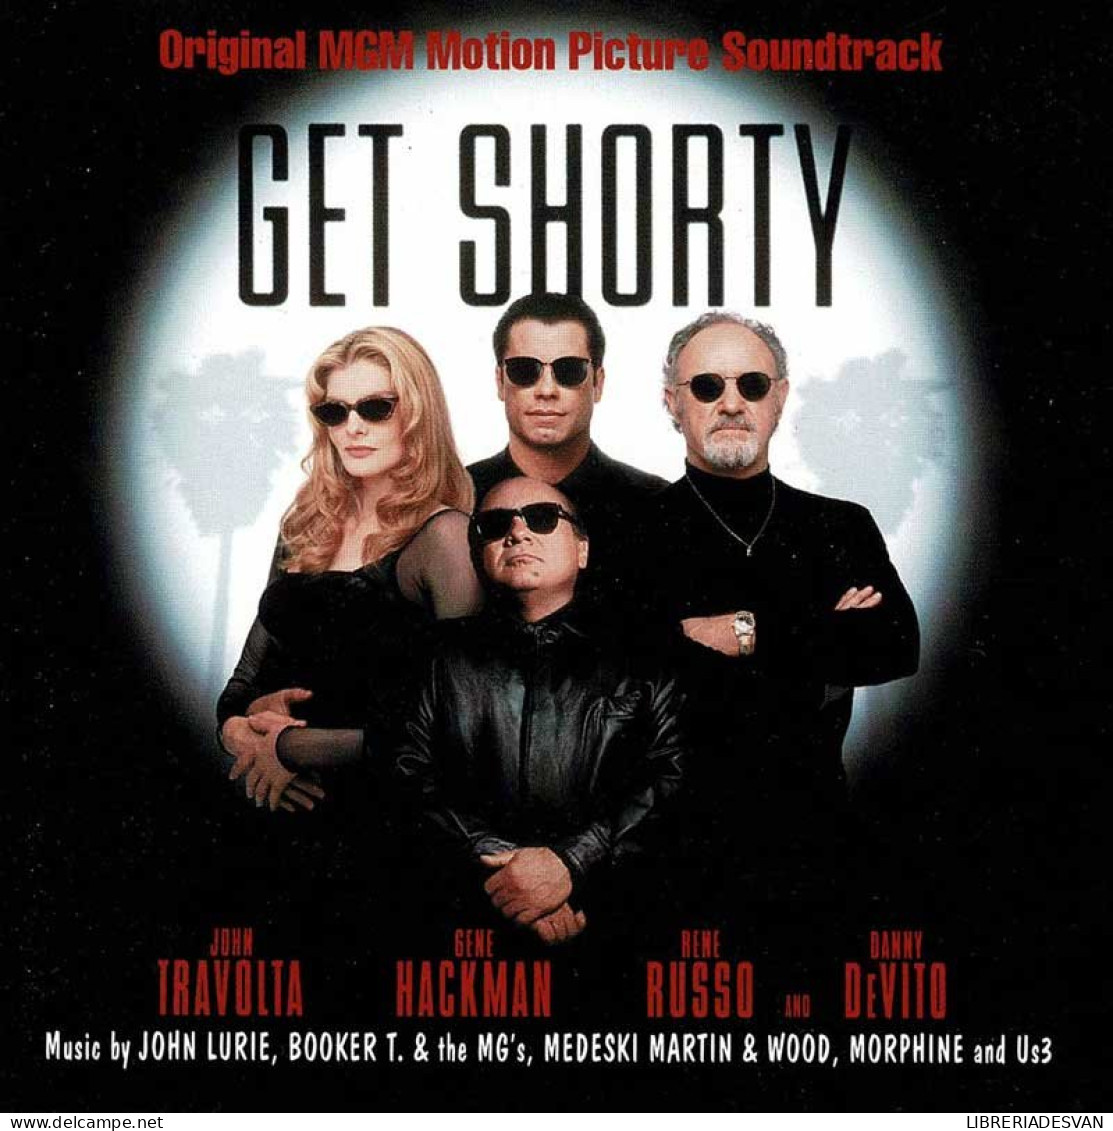 Get Shorty (Original MGM Motion Picture Soundtrack). CD - Musica Di Film